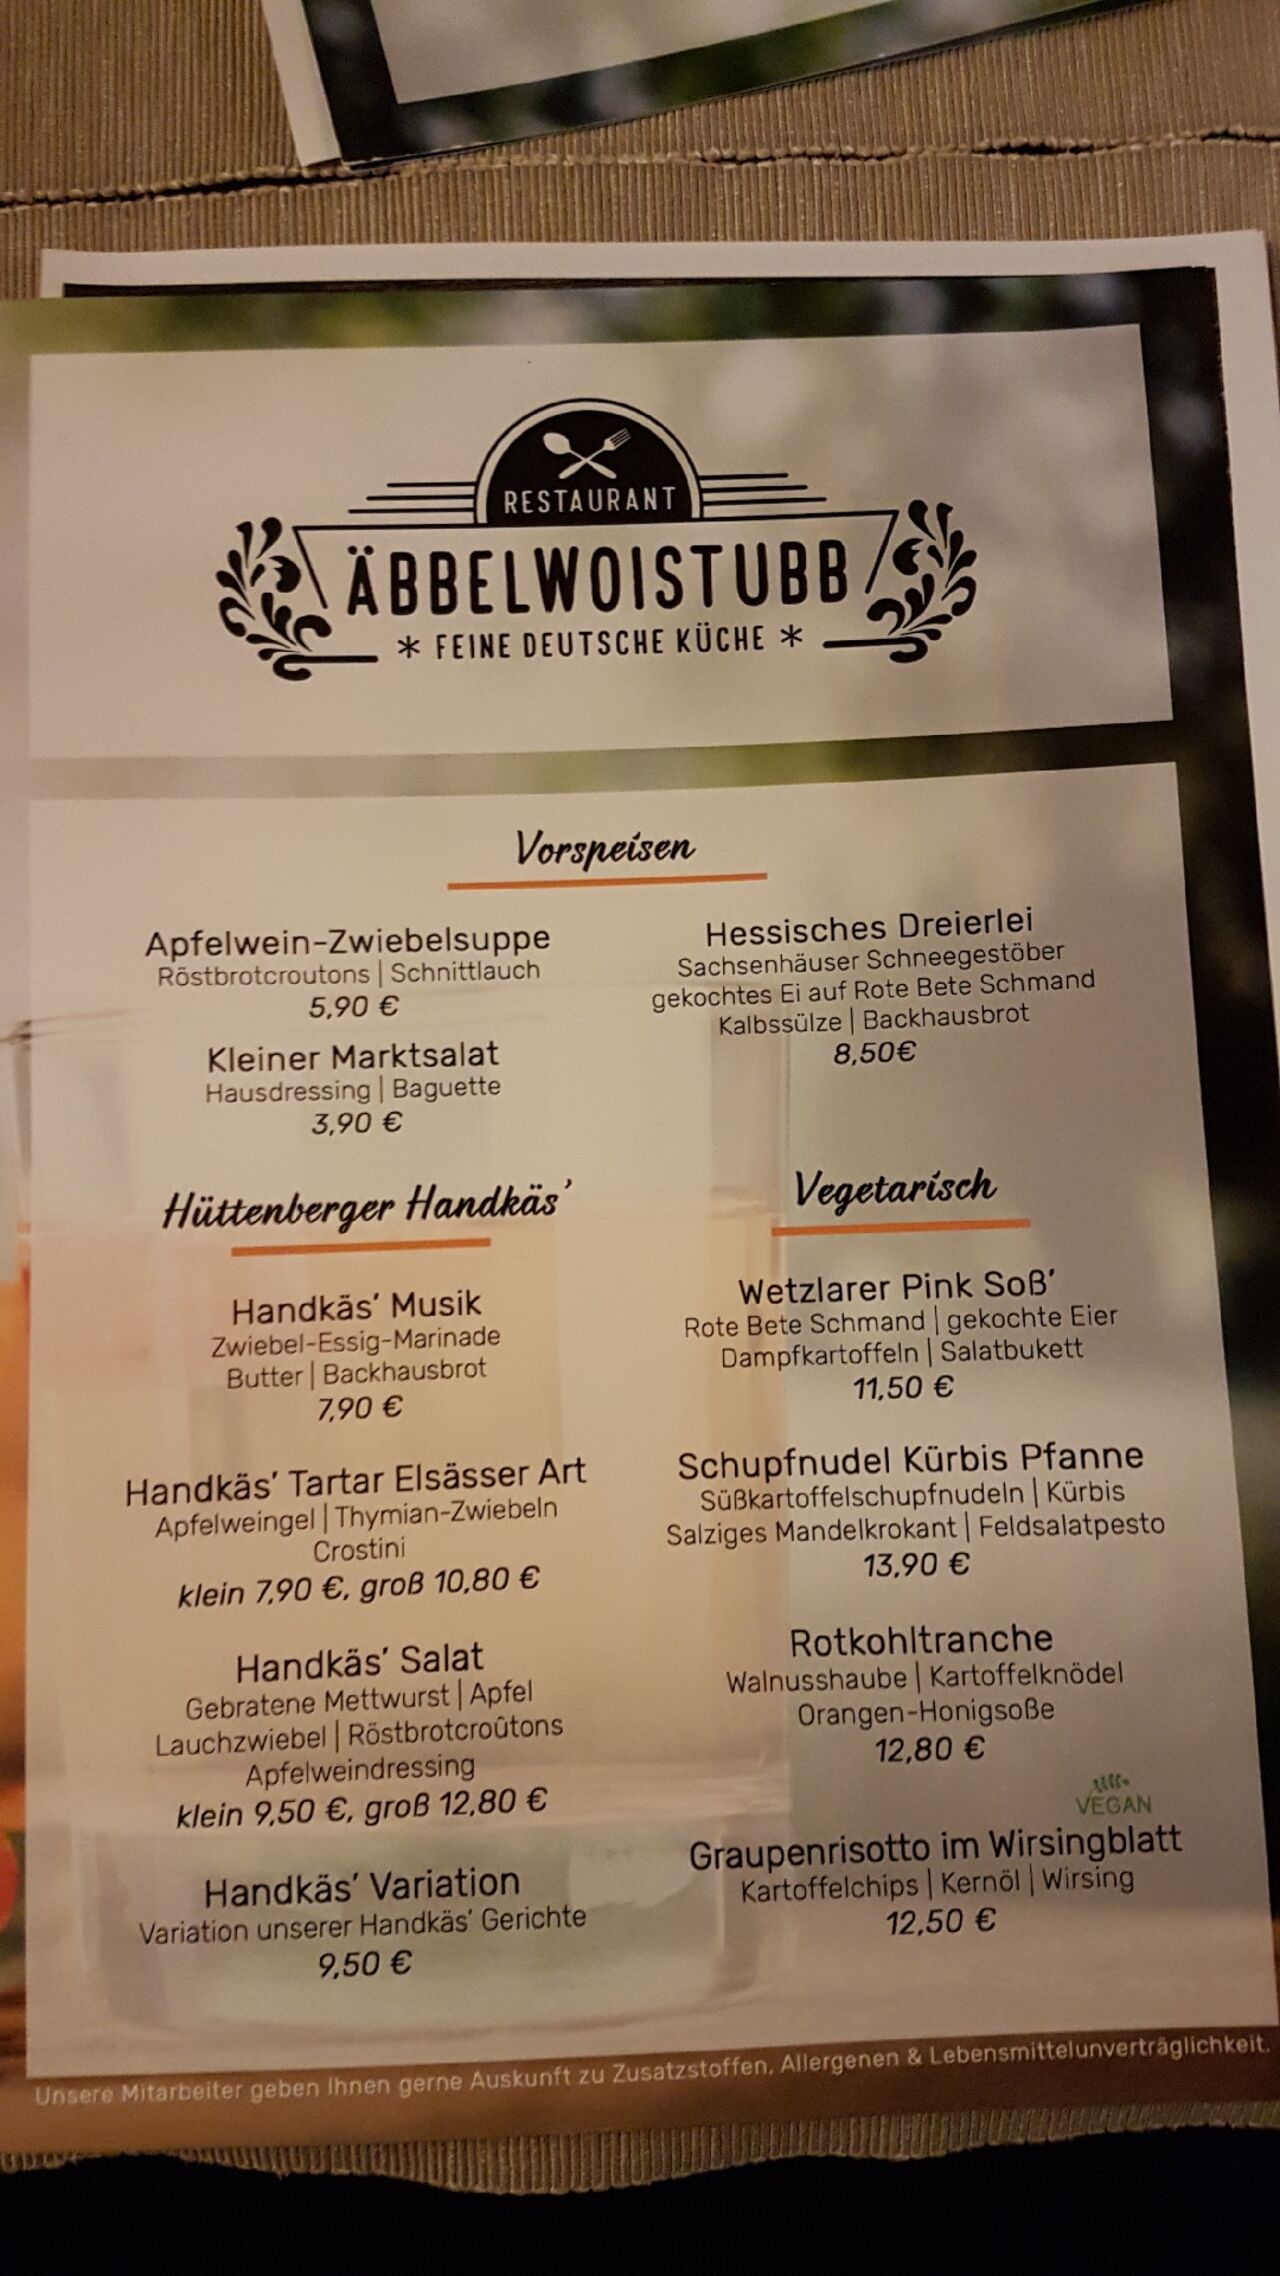 A photo of Äbbelwoistubb